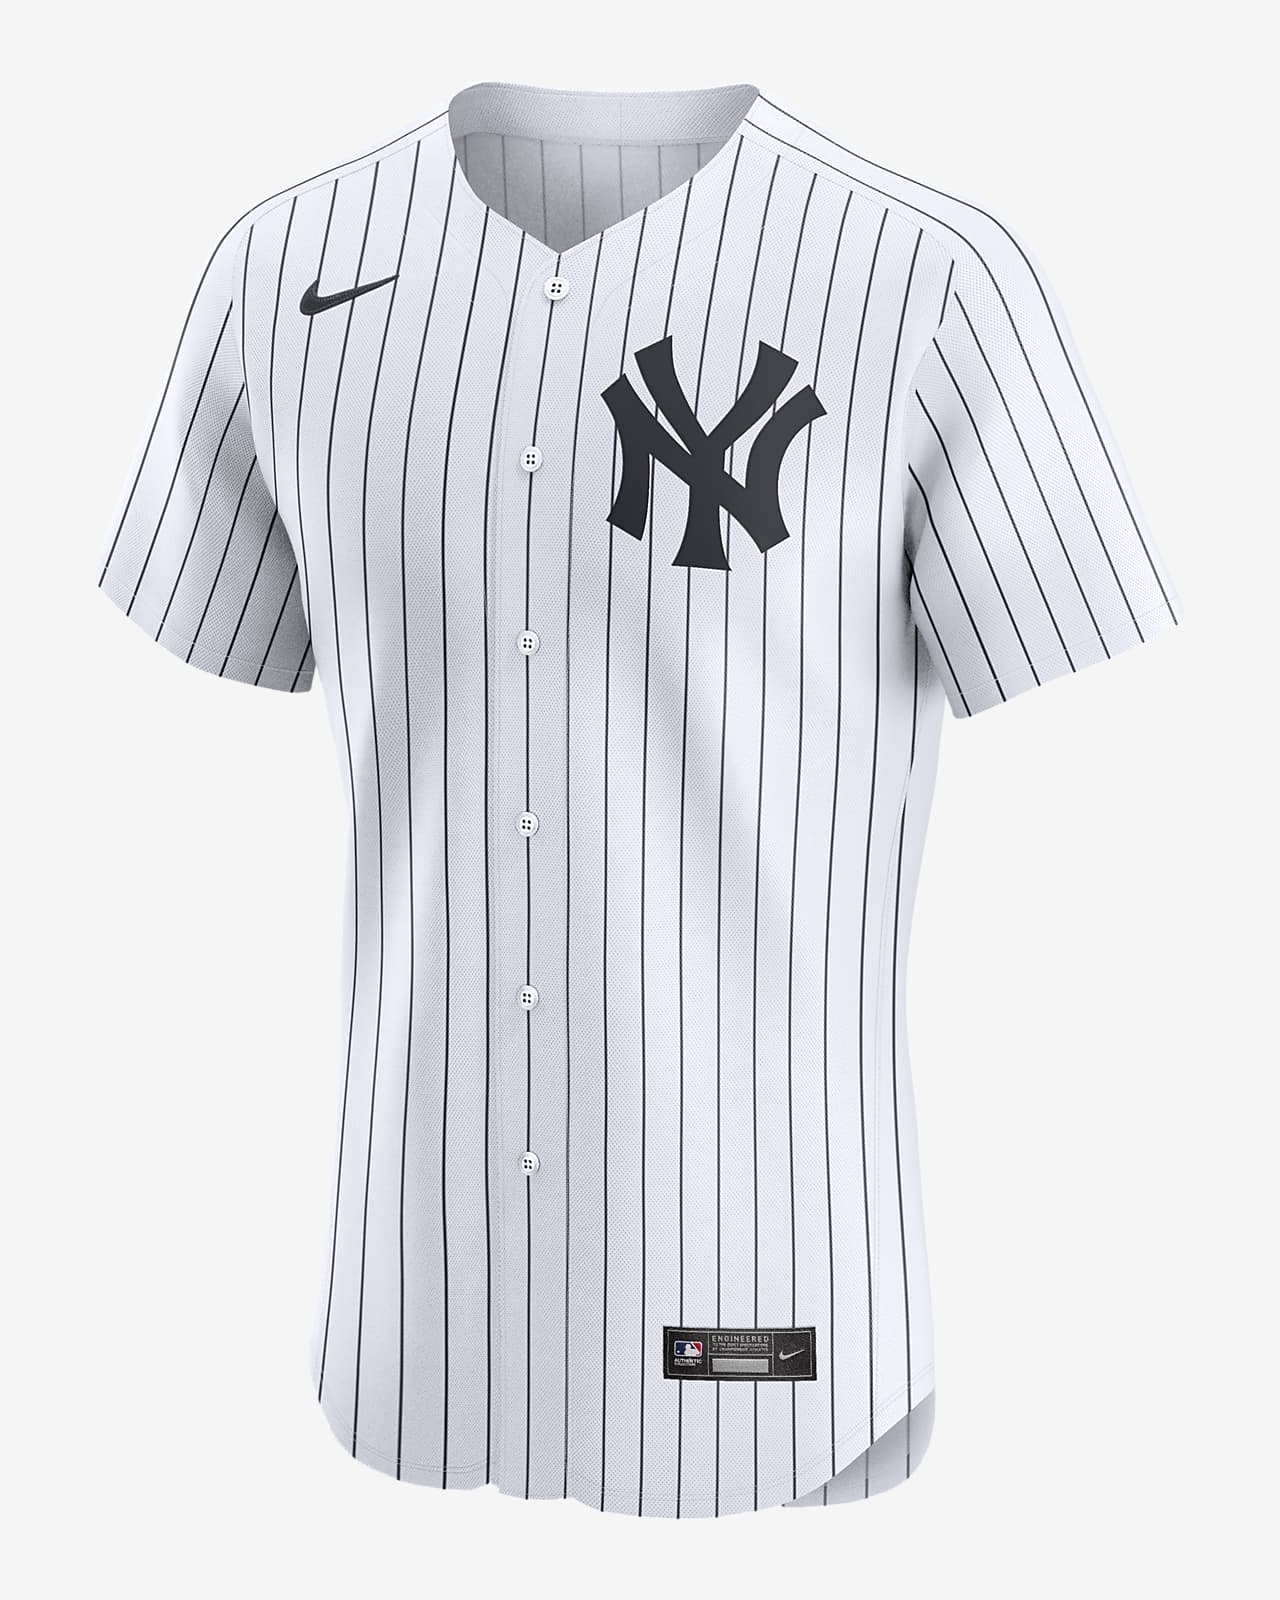 Jersey Nike Dri-FIT ADV de la MLB Elite para hombre Aaron Judge New York Yankees